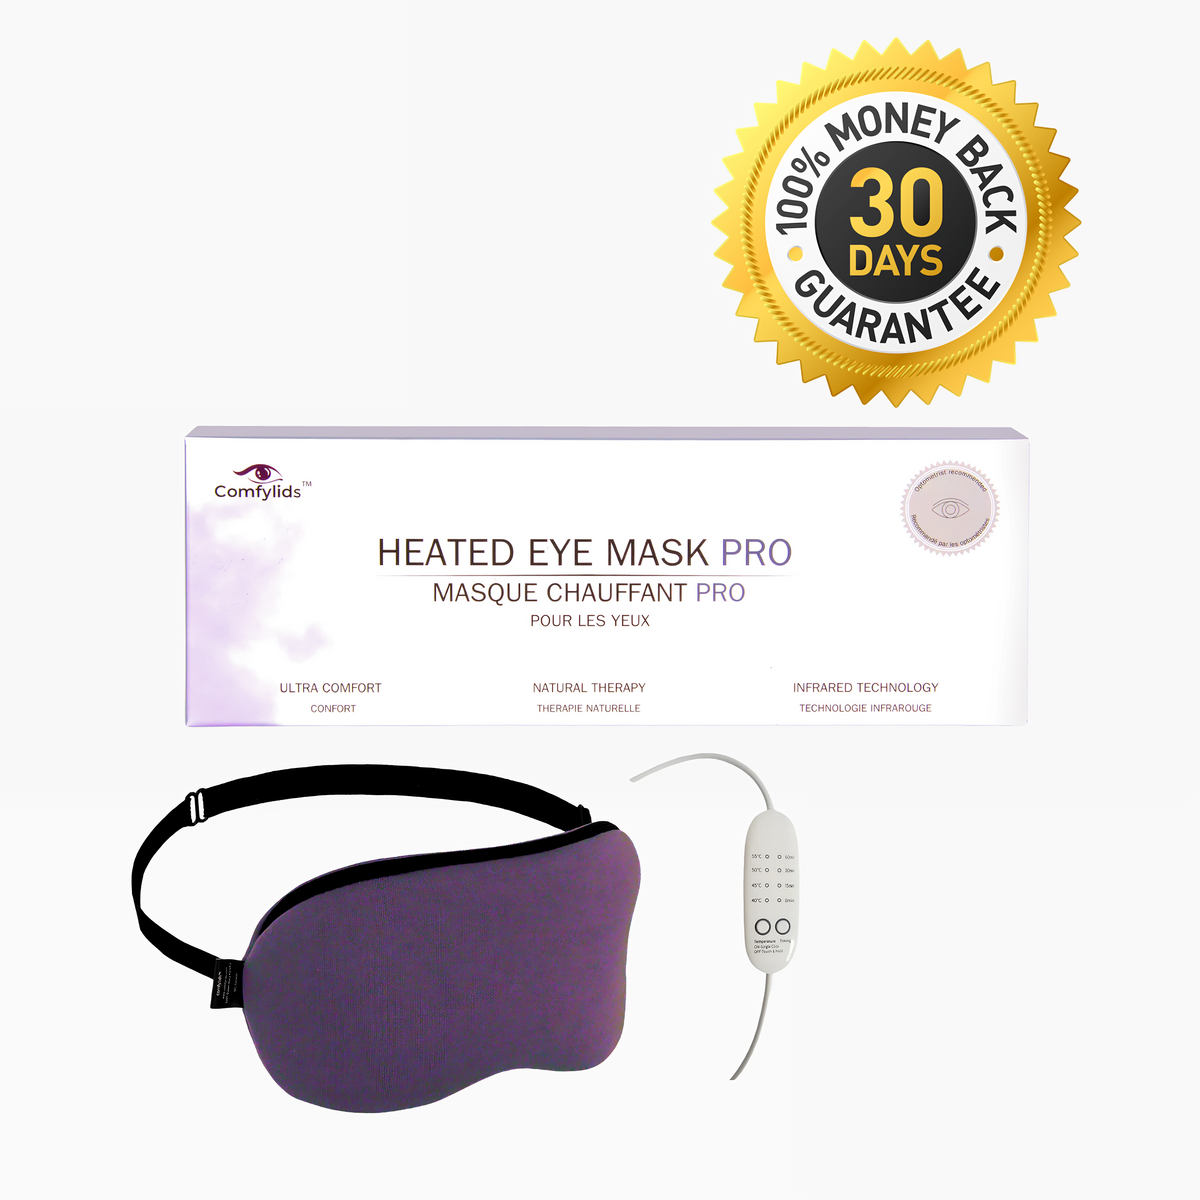 Heated Eye Mask PRO with box